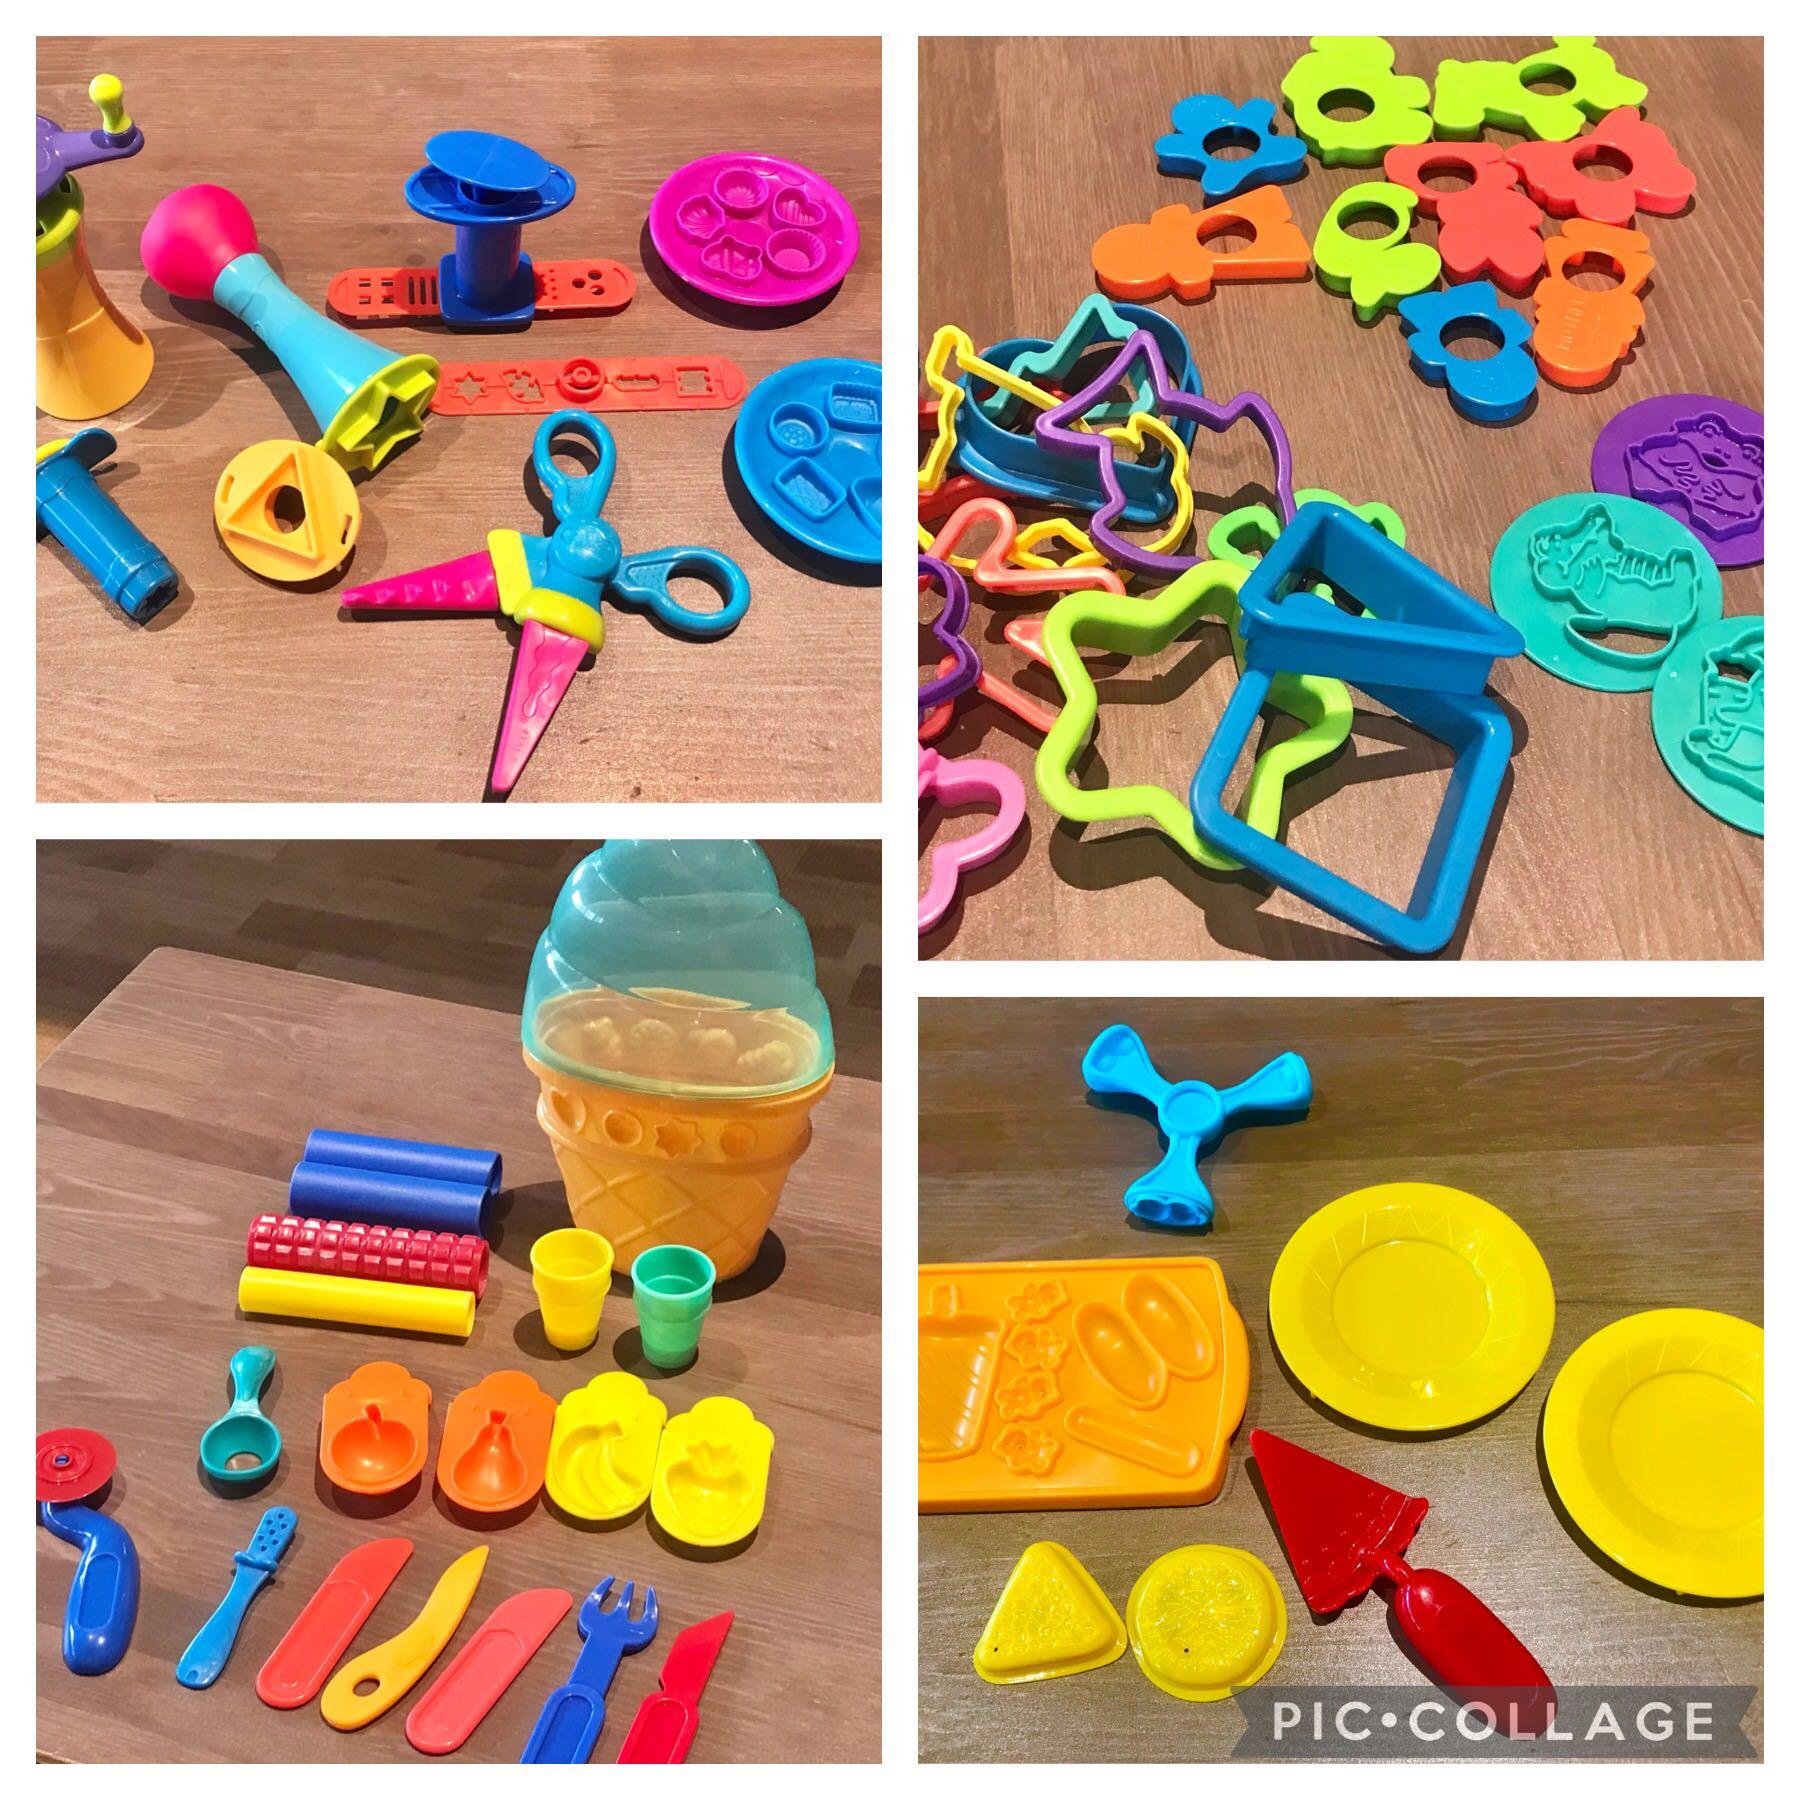 PLAYDOH Tools (kids play dough toy set)